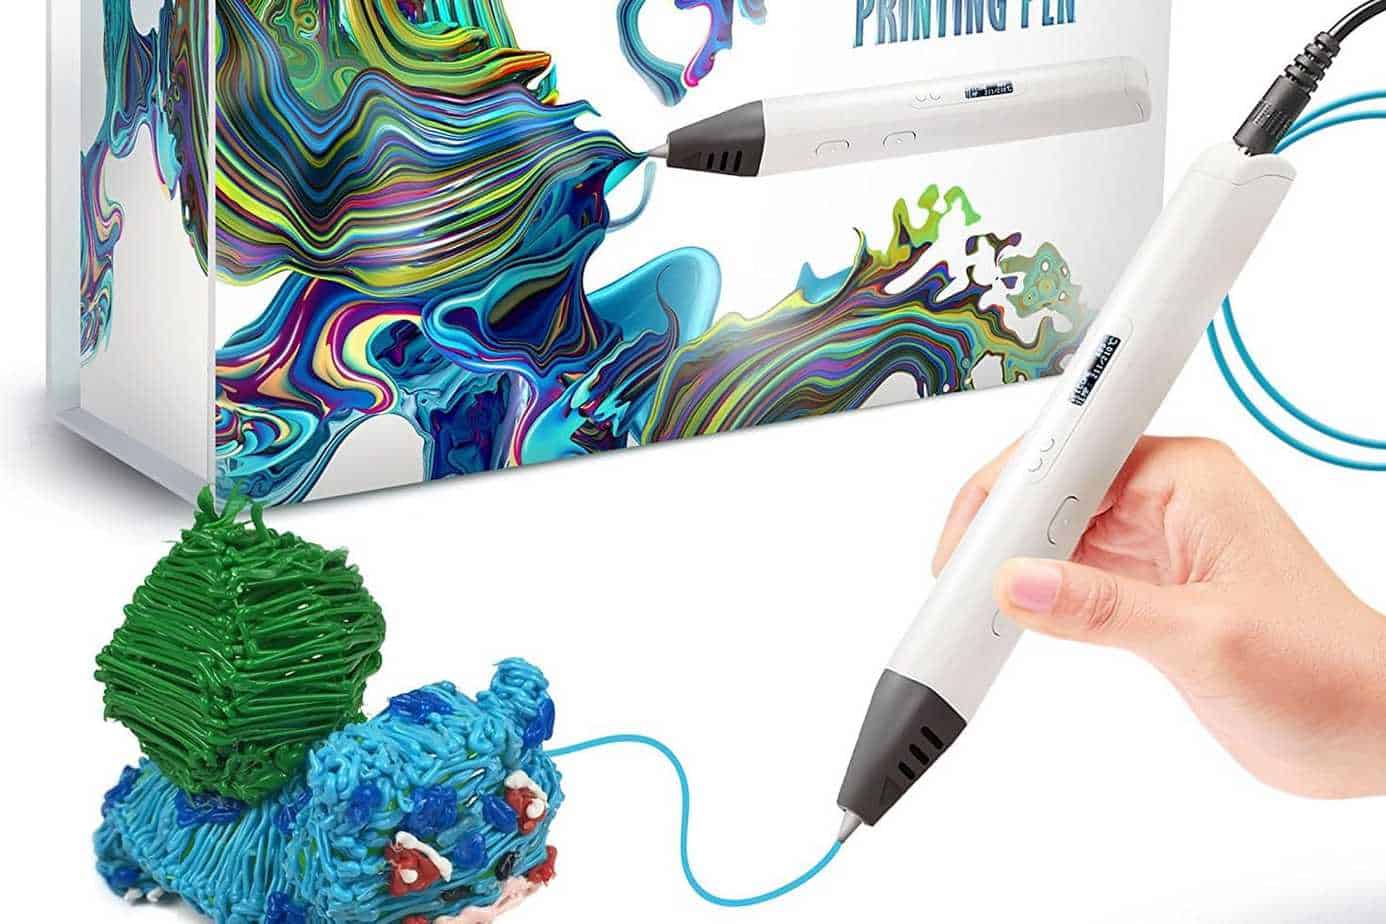 MYNT3D Professional Printing 3D Pen